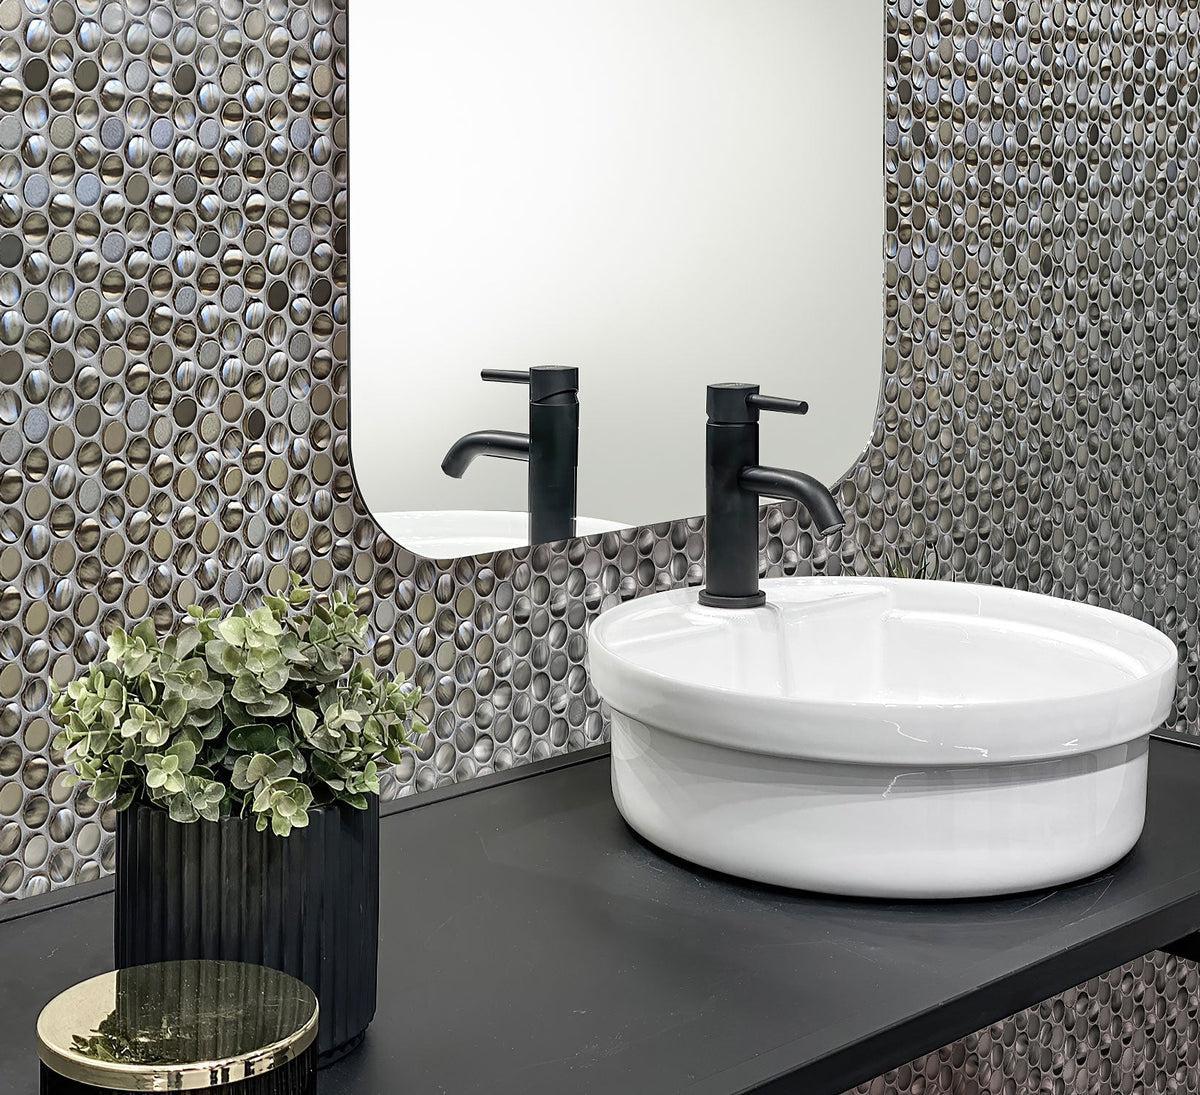 Stainless Steel Penny Pebble Metal Mosaic Bathroom Wall Tile